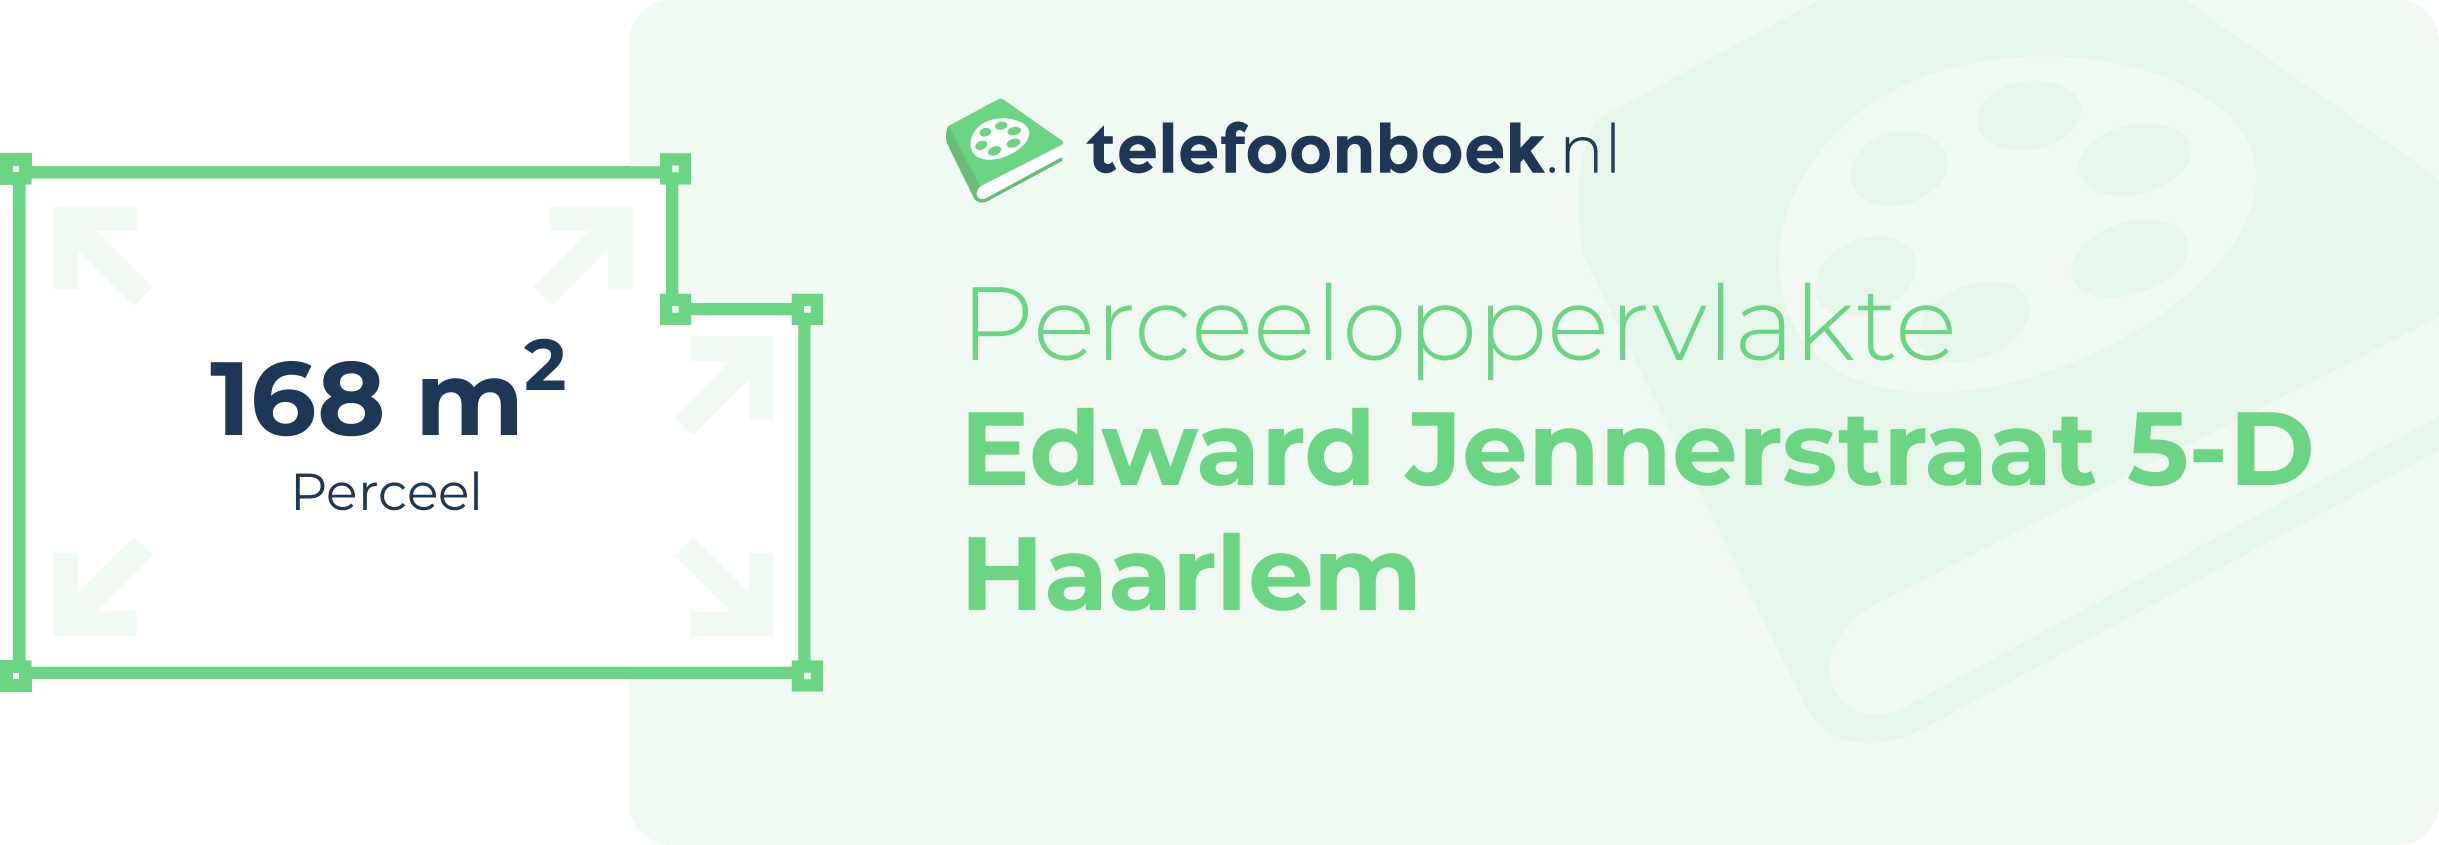 Perceeloppervlakte Edward Jennerstraat 5-D Haarlem